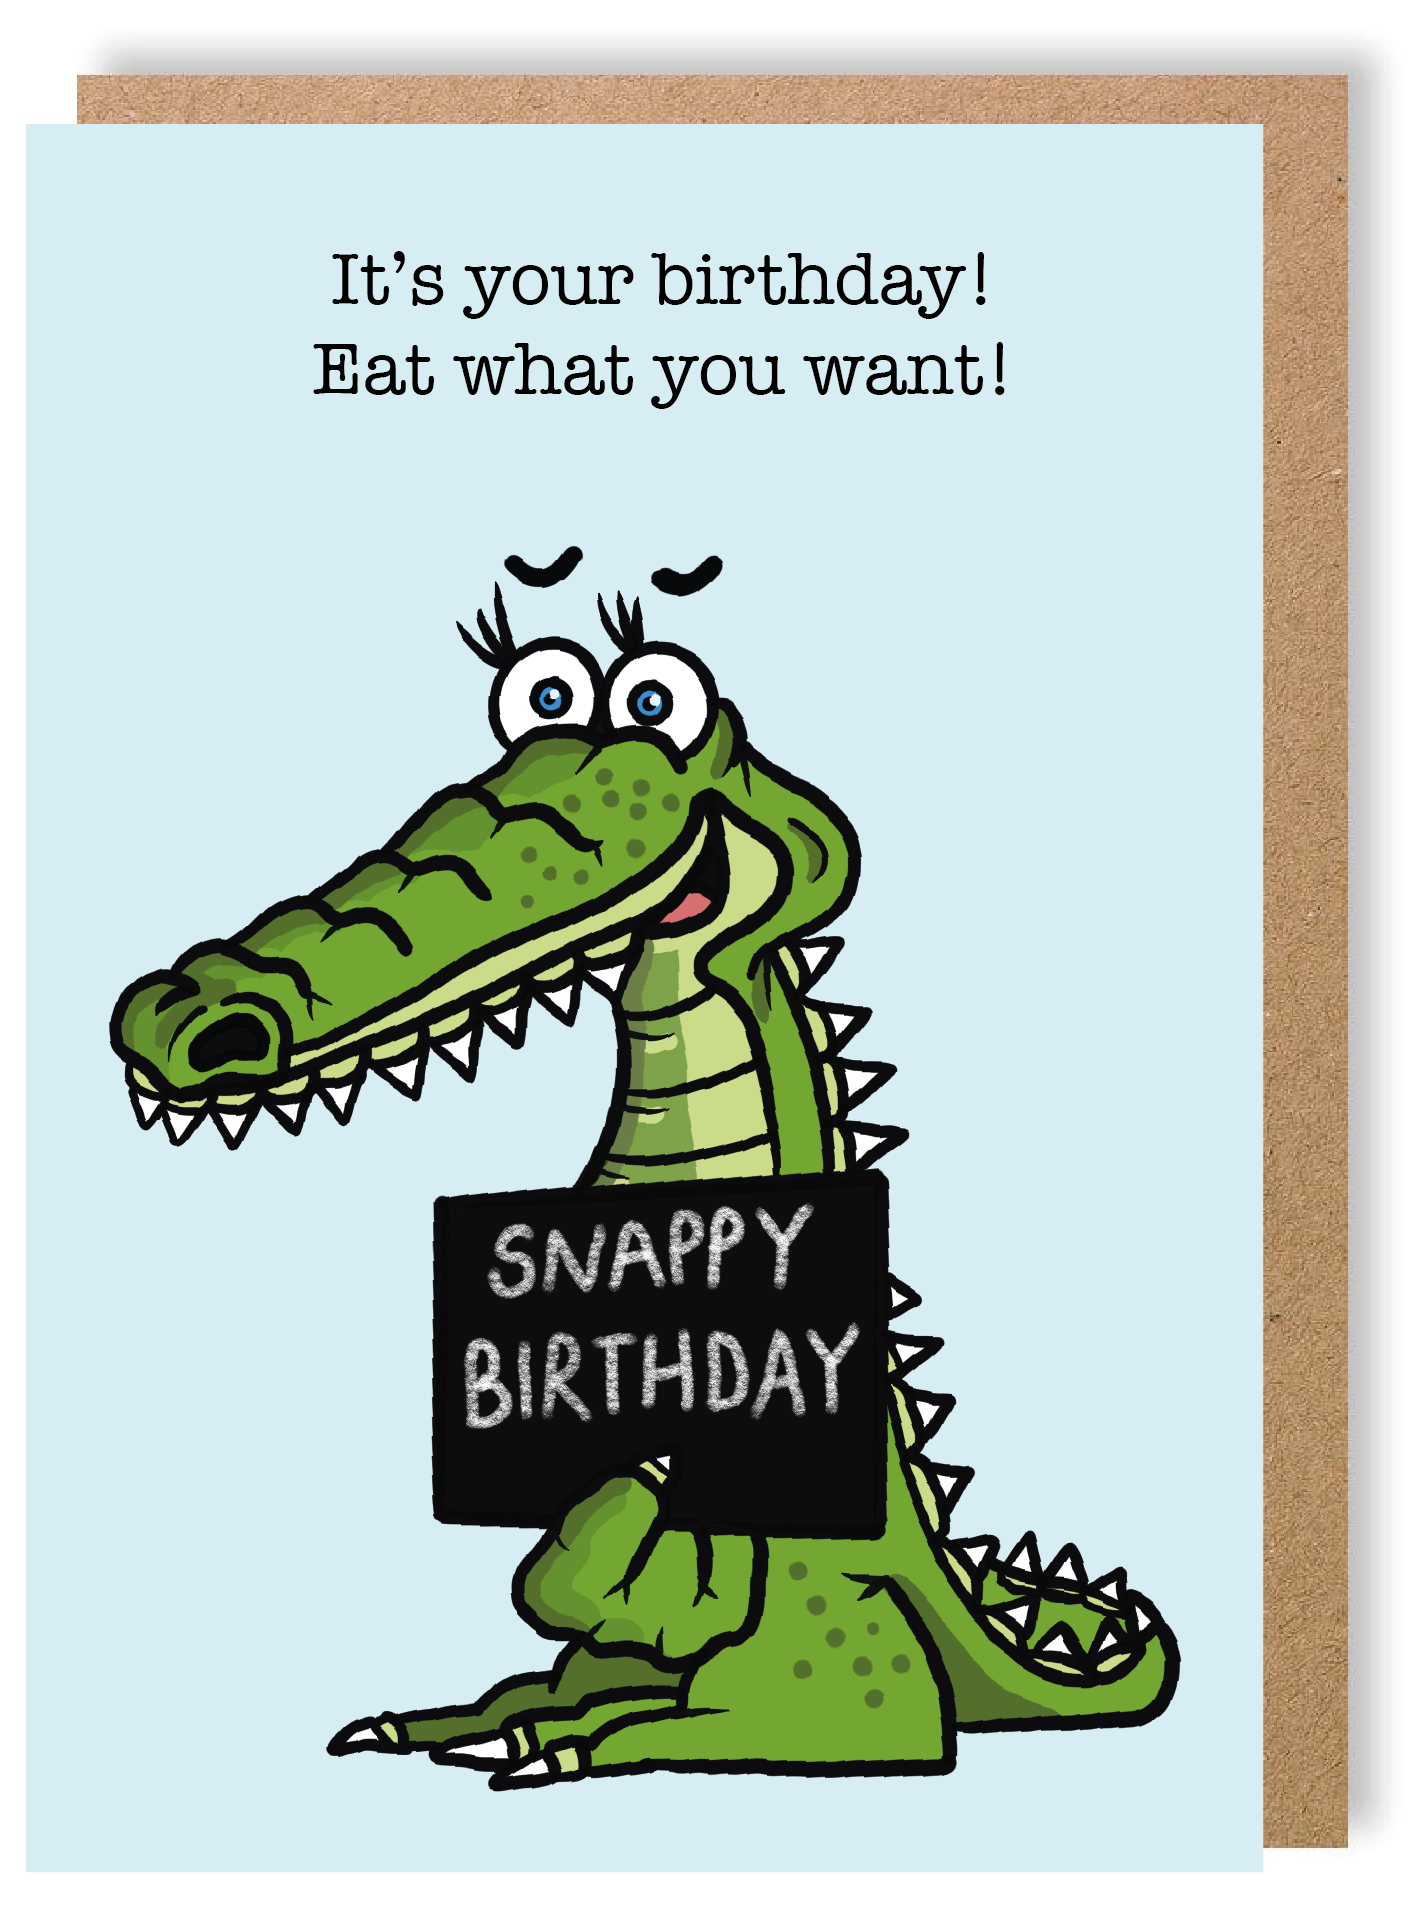 Snappy Birthday - Crocodile - Greetings Card - LukeHorton Art